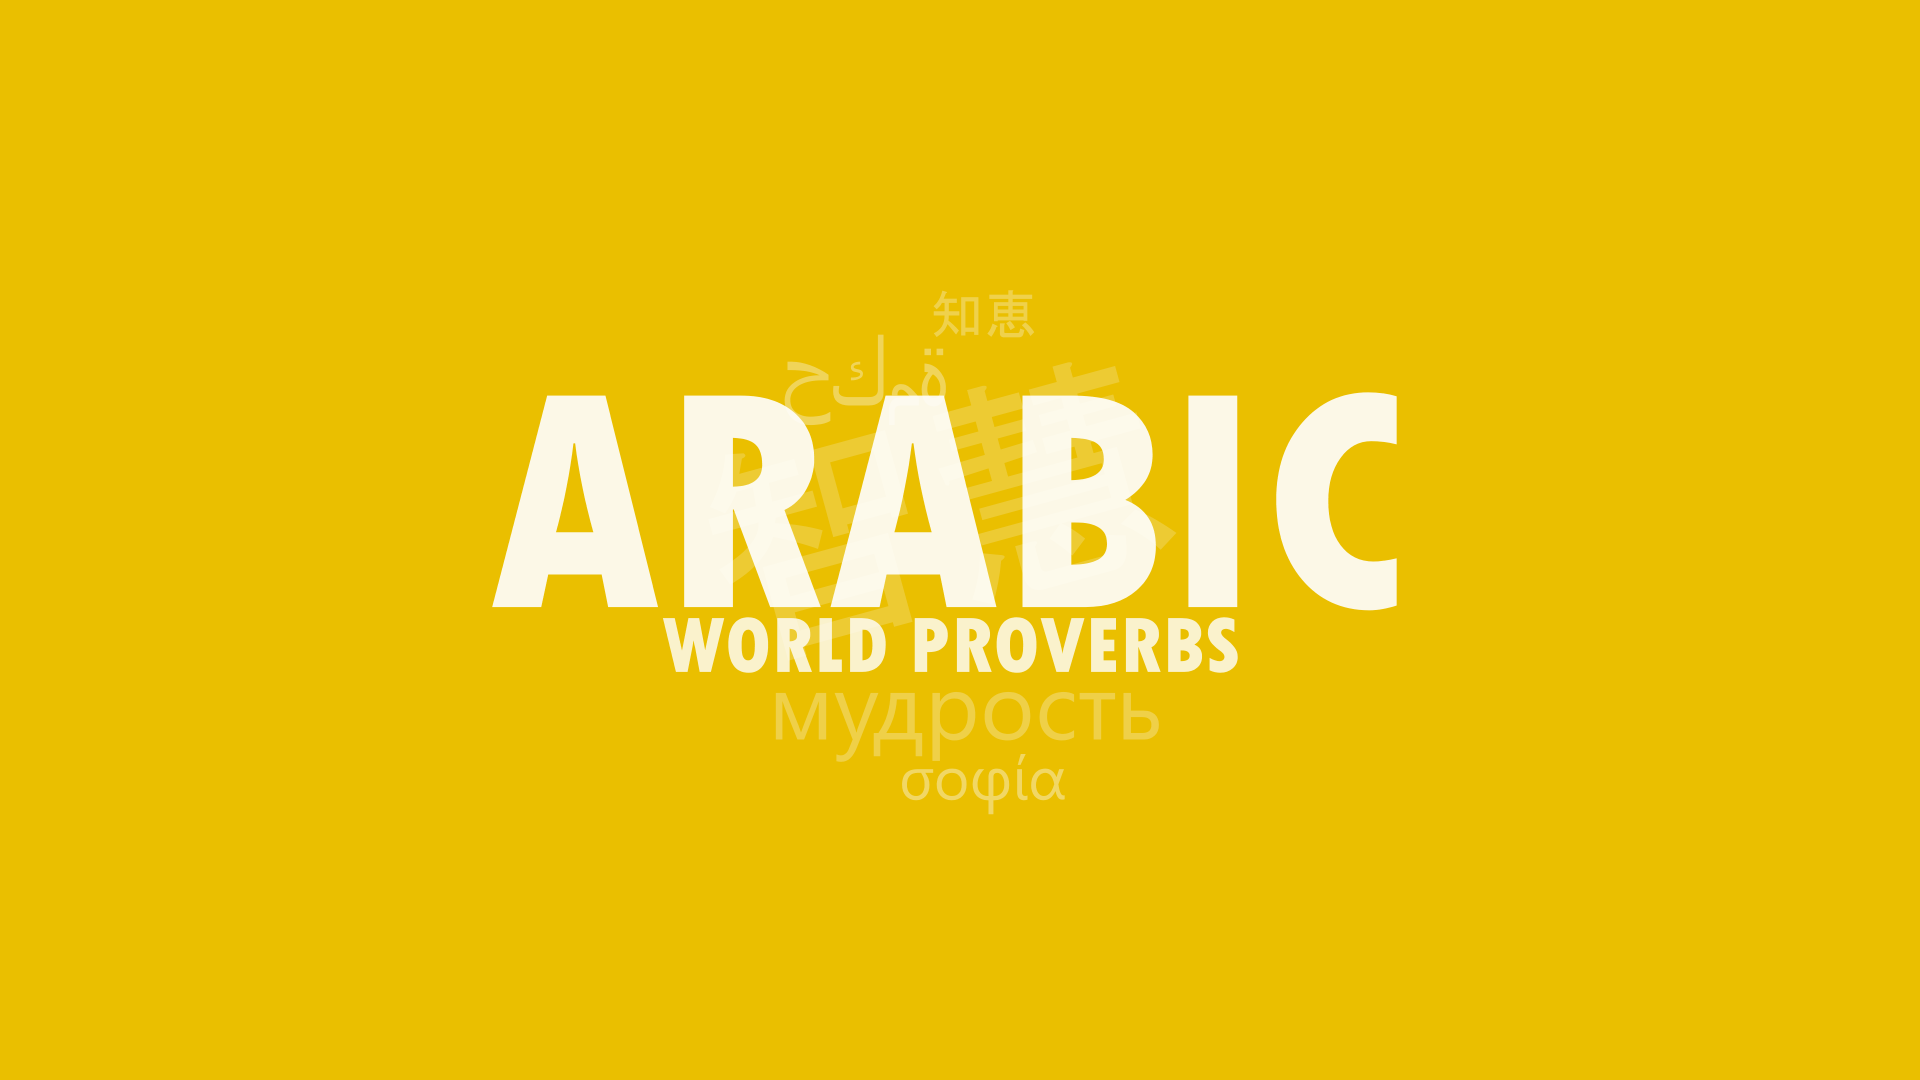 Hundred of hand-picked Arabian proverbs